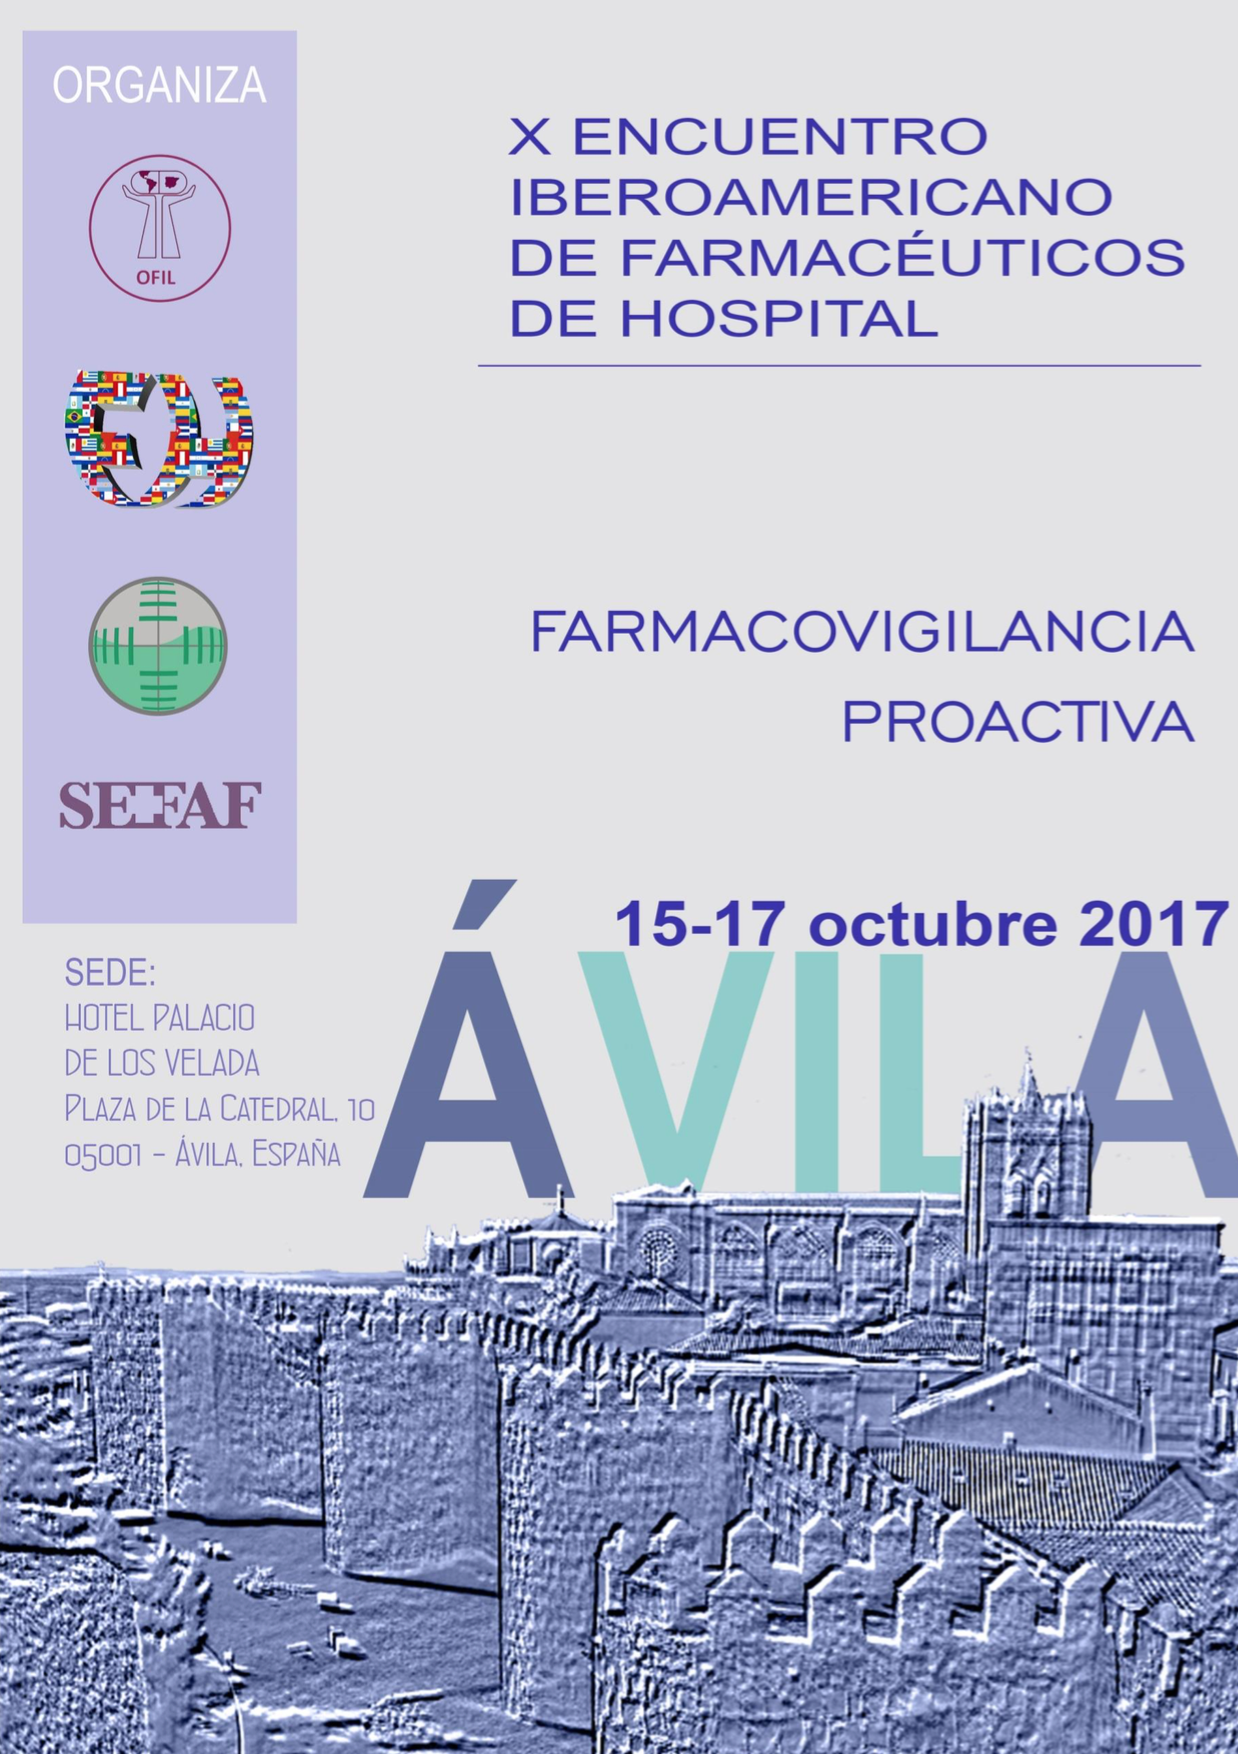 X Encuentro Iberoamericano de farmacéuticos de hospital